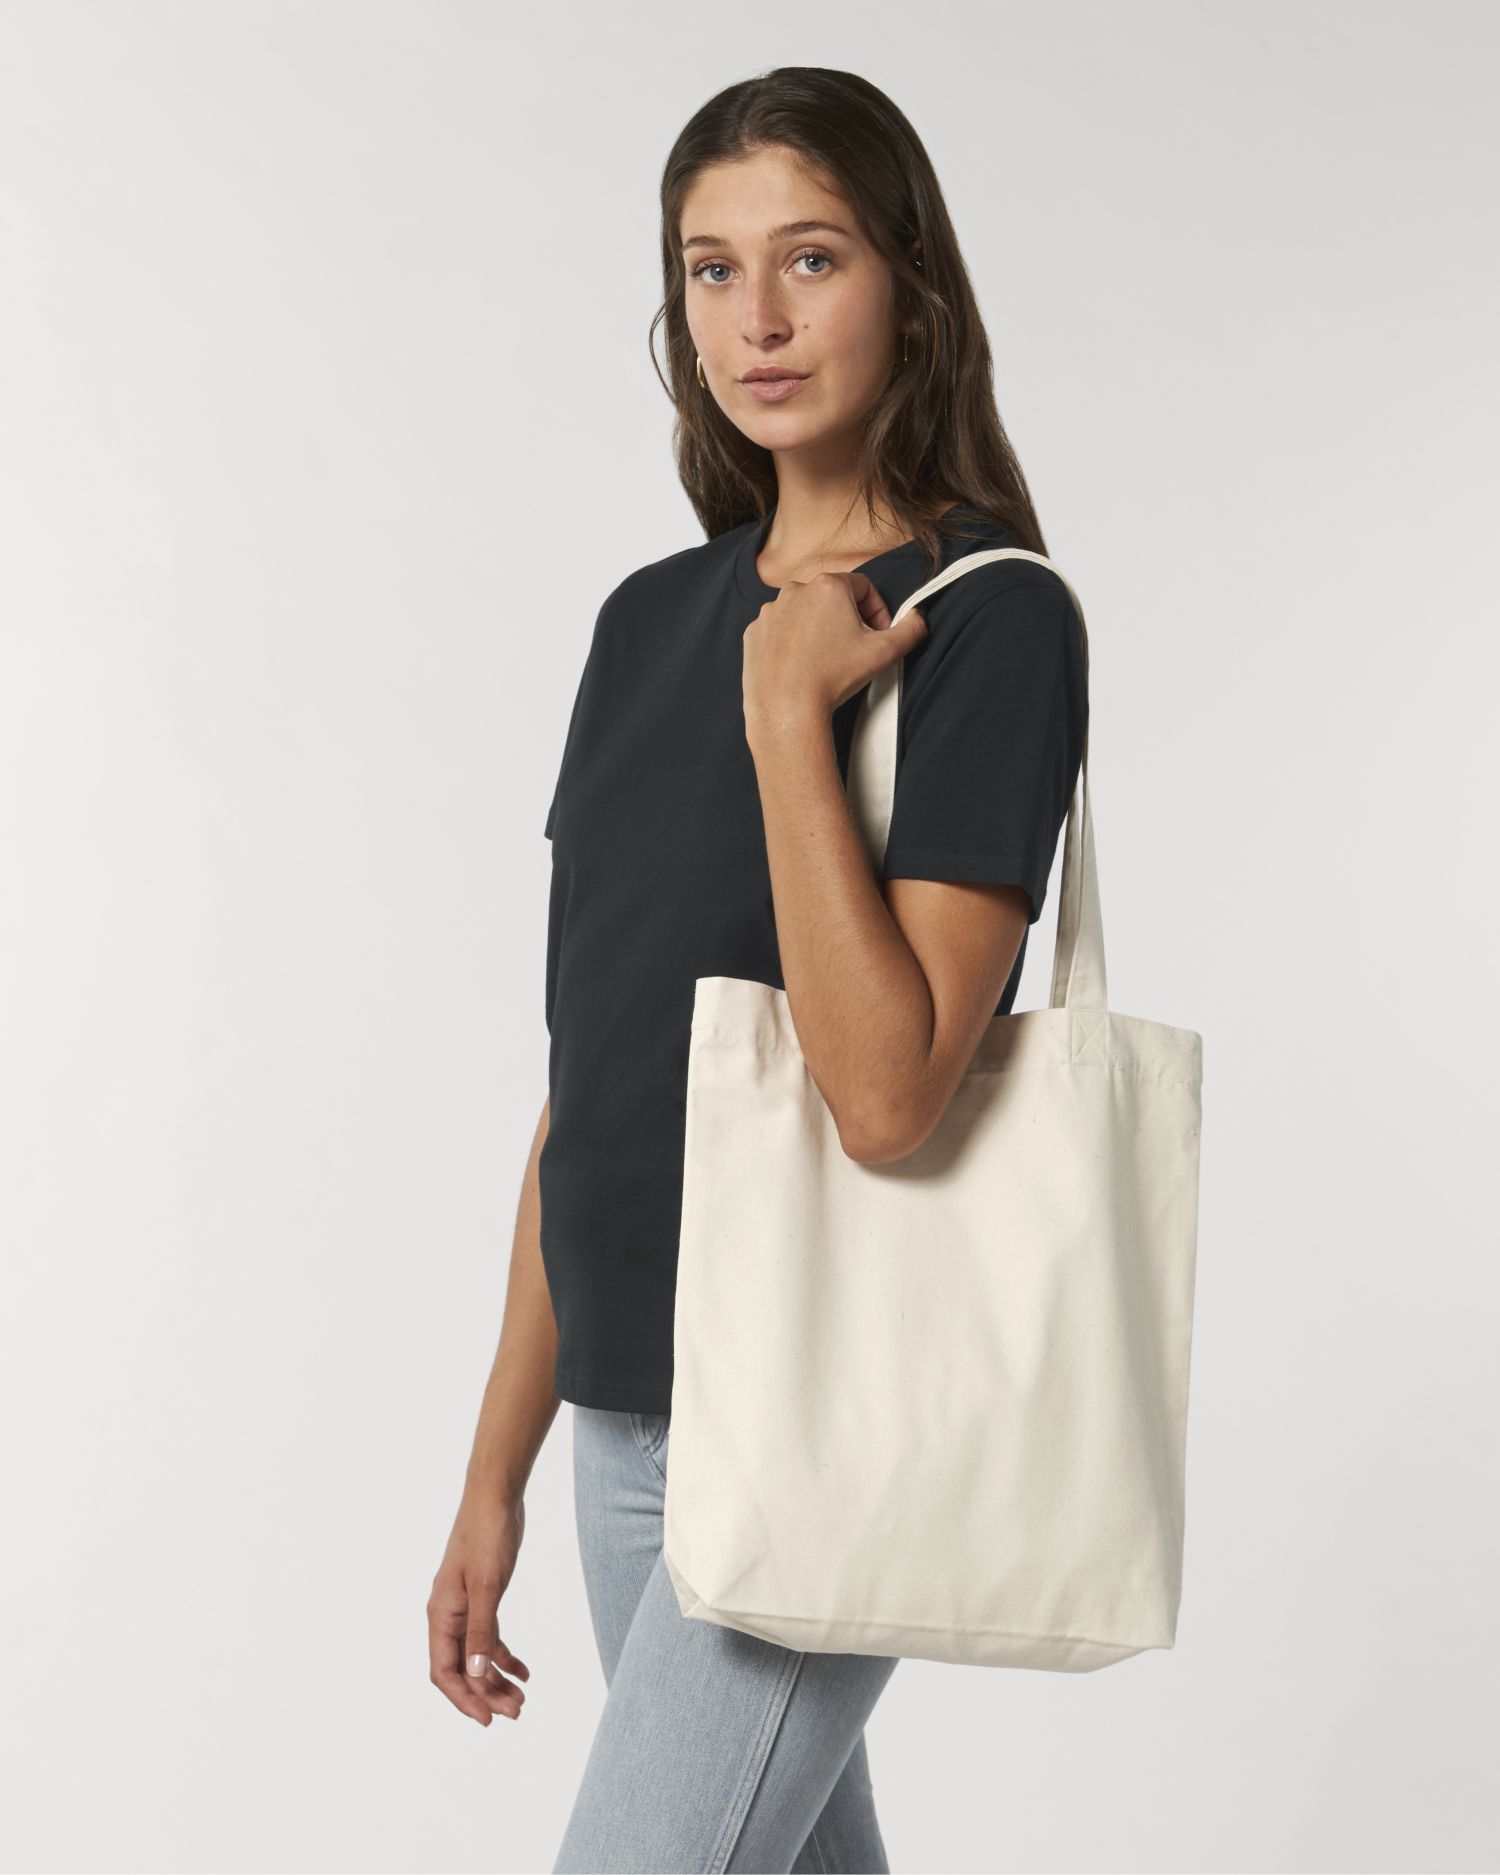 Tasche Tote Bag in Farbe Natural